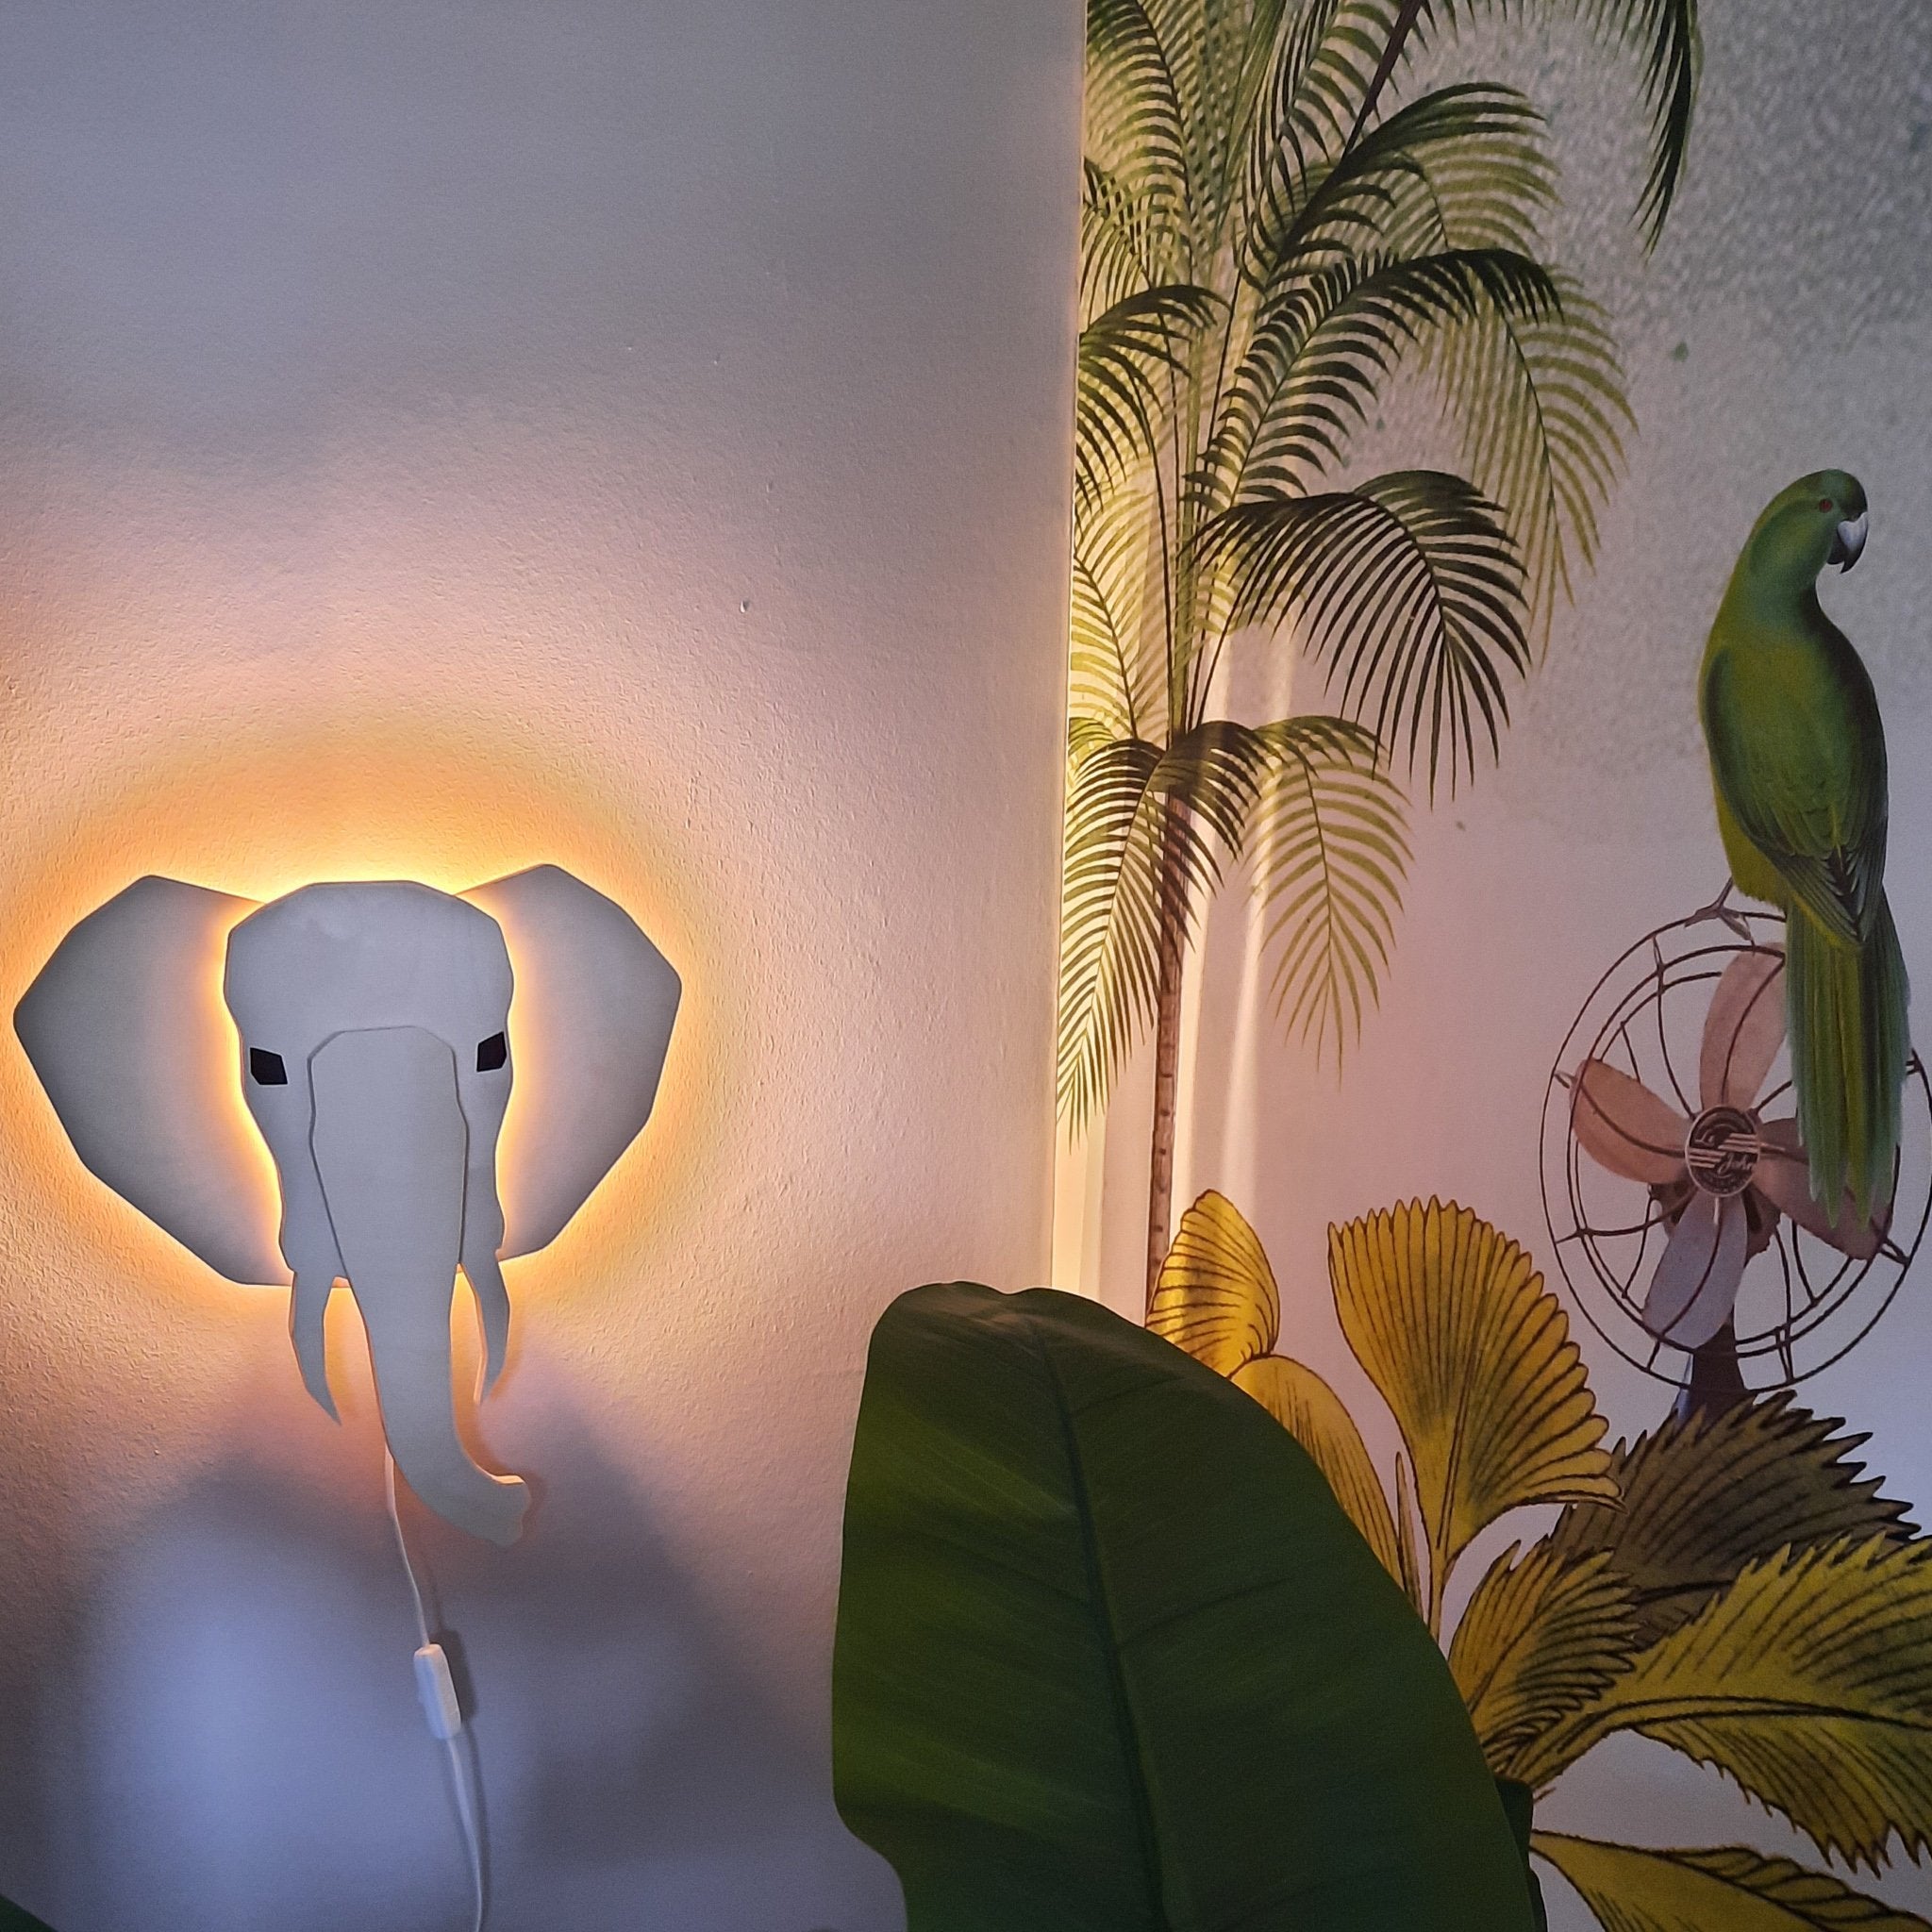 Hölzerne Wandleuchte Kinderzimmer | Elefant 3D - natur Wandleuchte toddie.de   